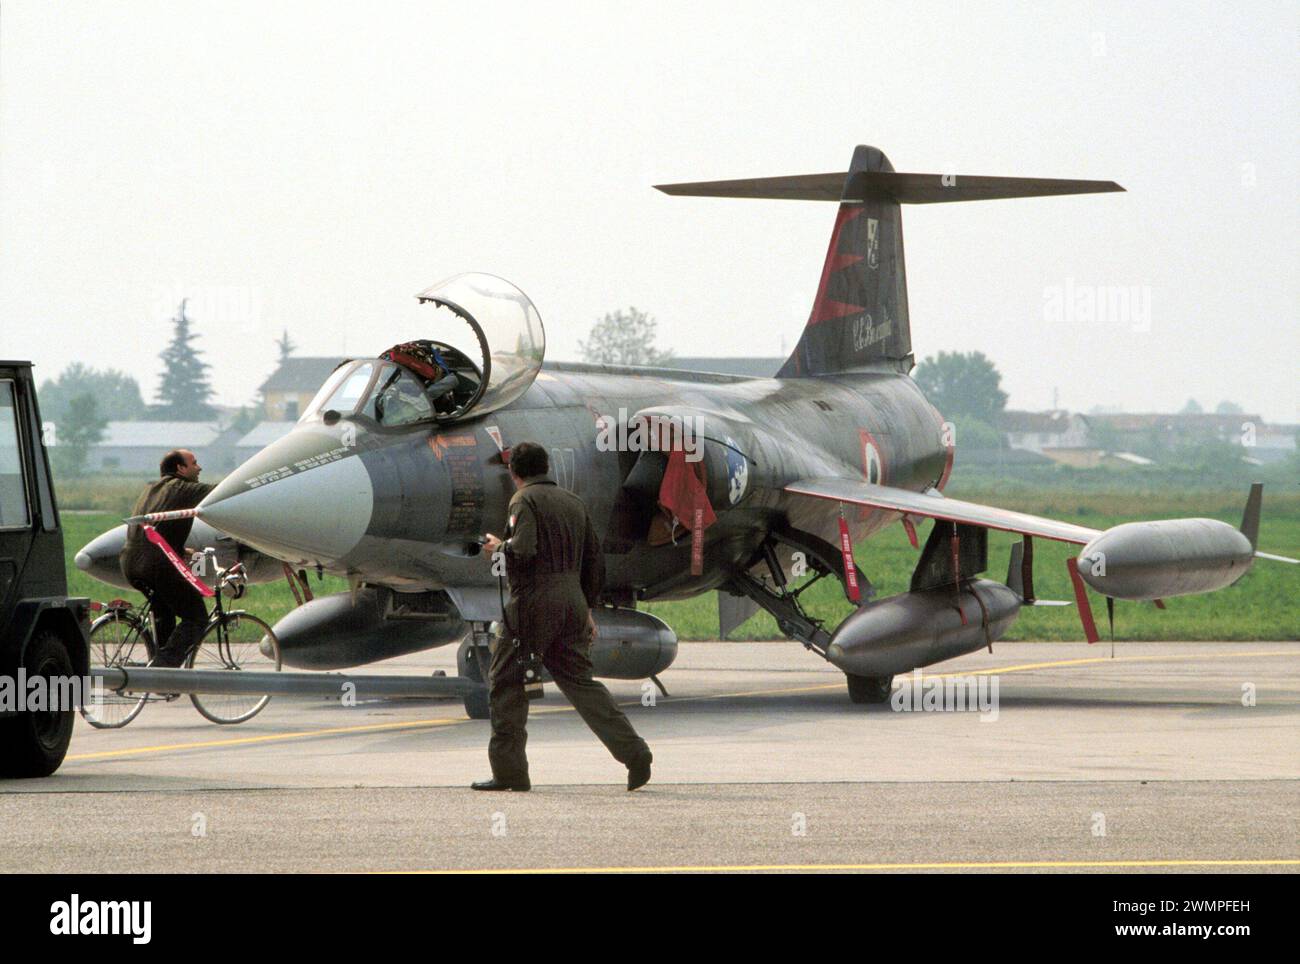 - Italienische Luftwaffe, Kampfflugzeug F 104 Starfighter... - Aeronautica Militare Italiana, Caccia F 104 Starfighter Stockfoto